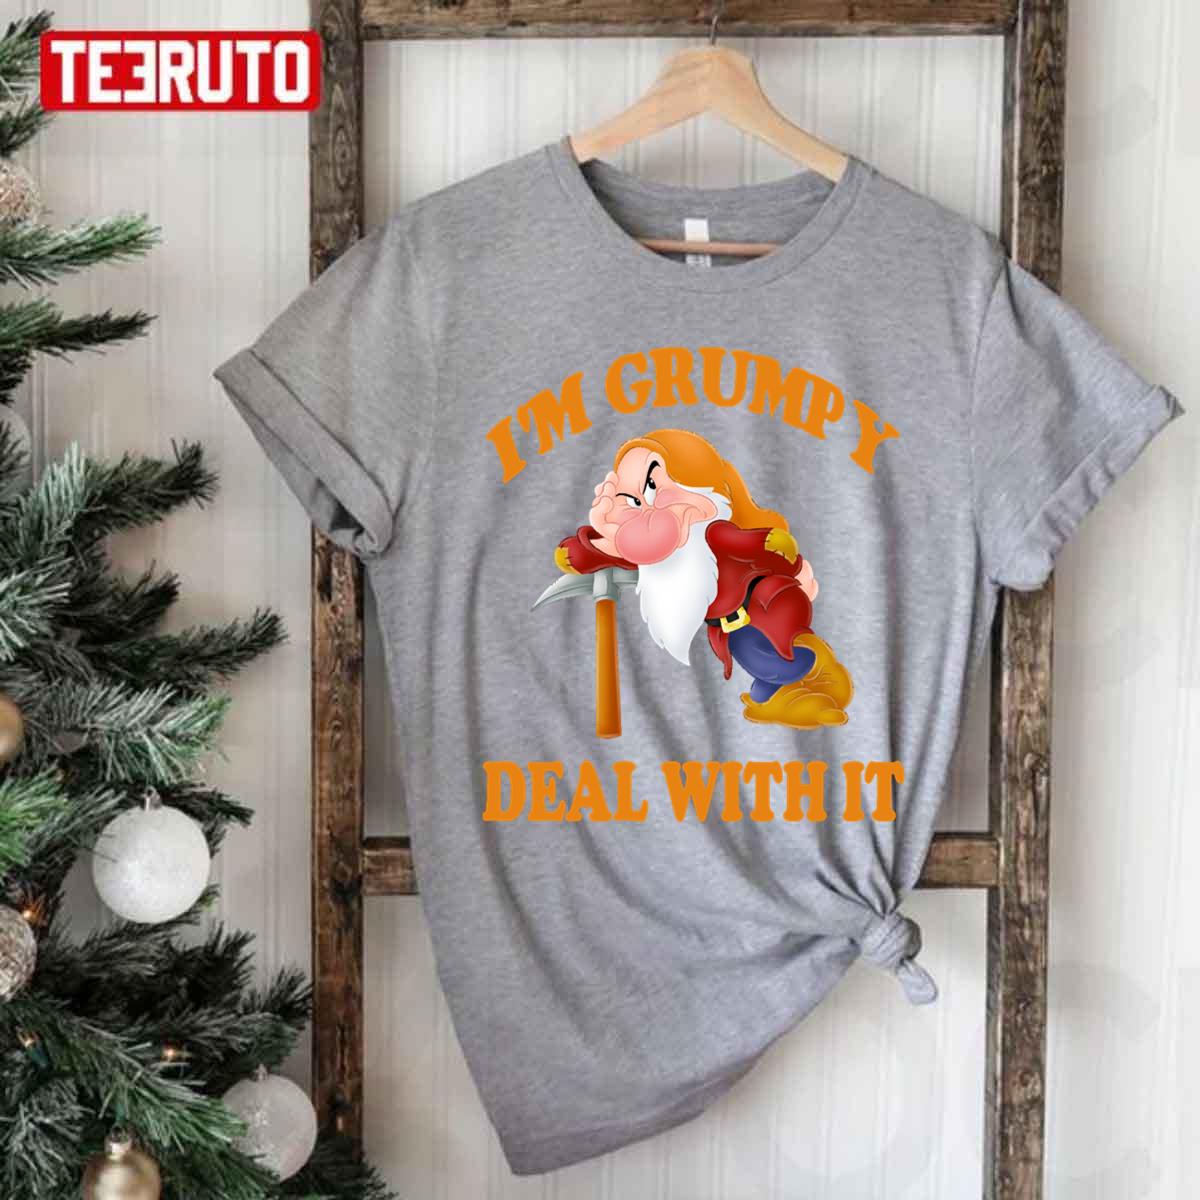 I’m Grumpy Deal With It Funny Dwarf Unisex T-Shirt